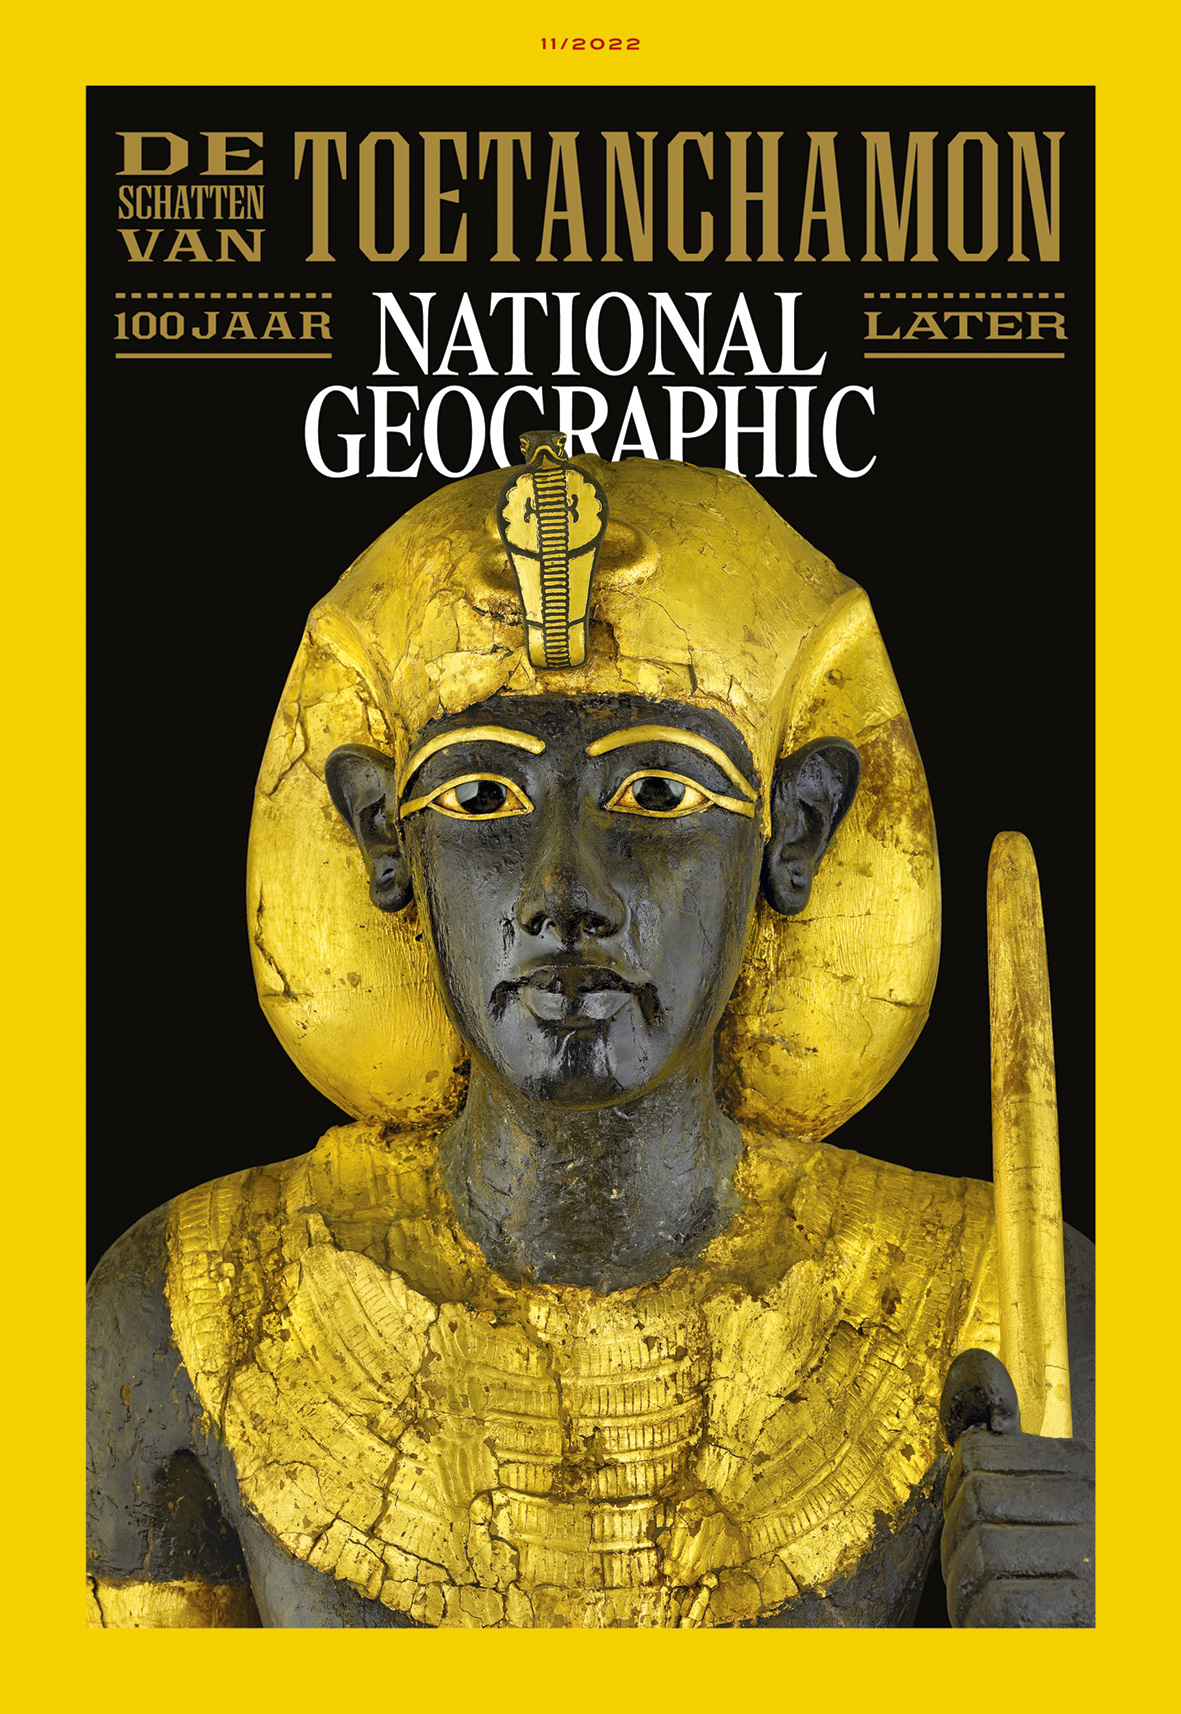 National Geographic Magazine editie 11 2022 - tijdschrift - Toetanchamon